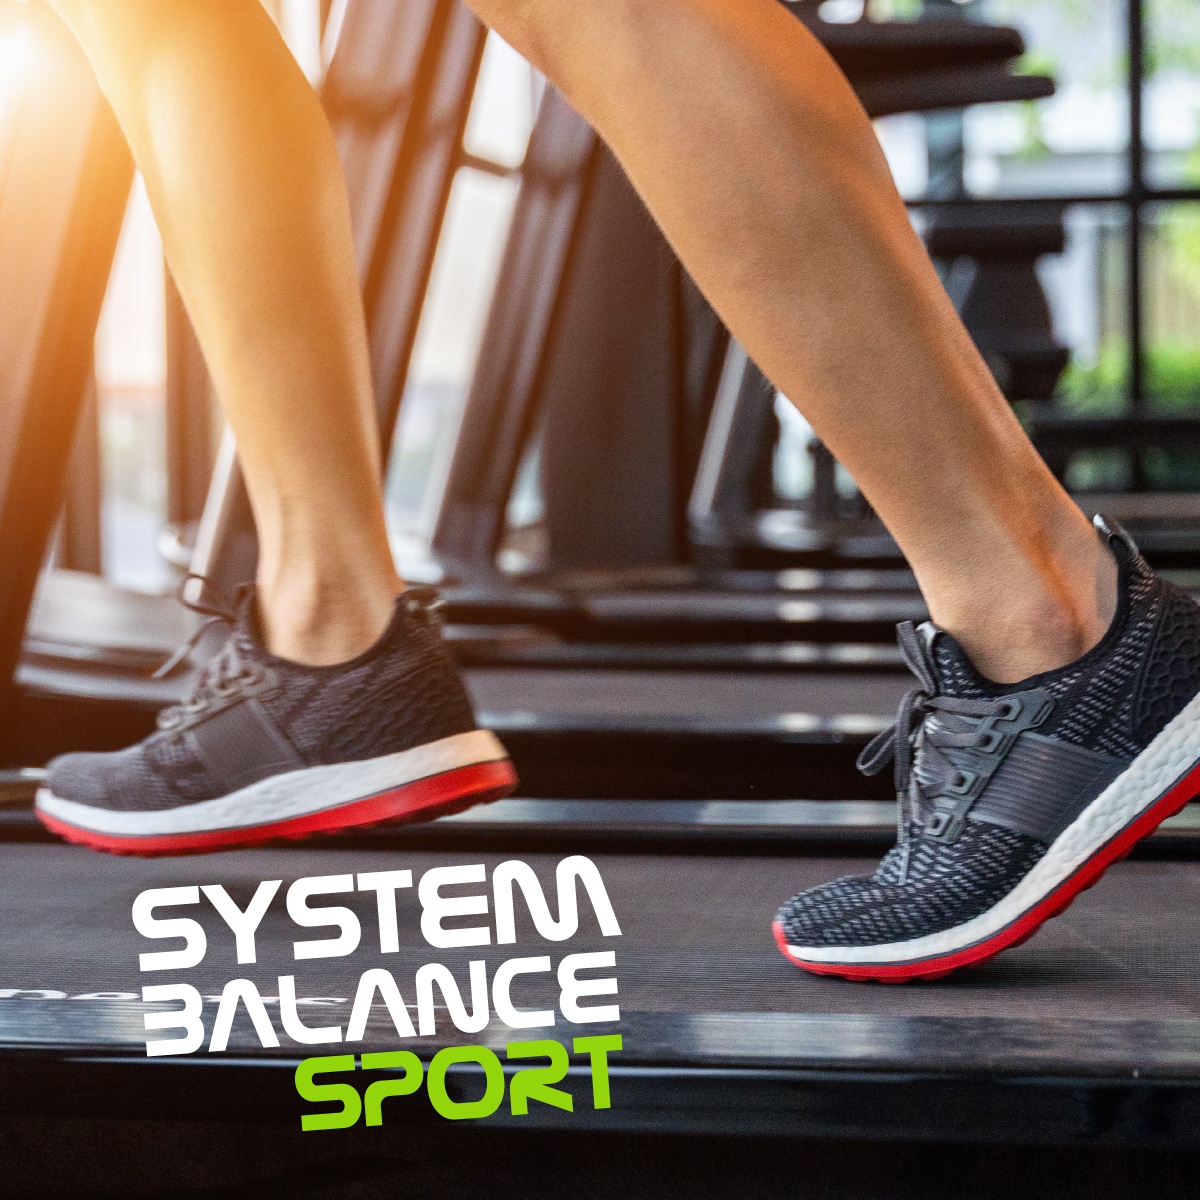 System balance sport 5